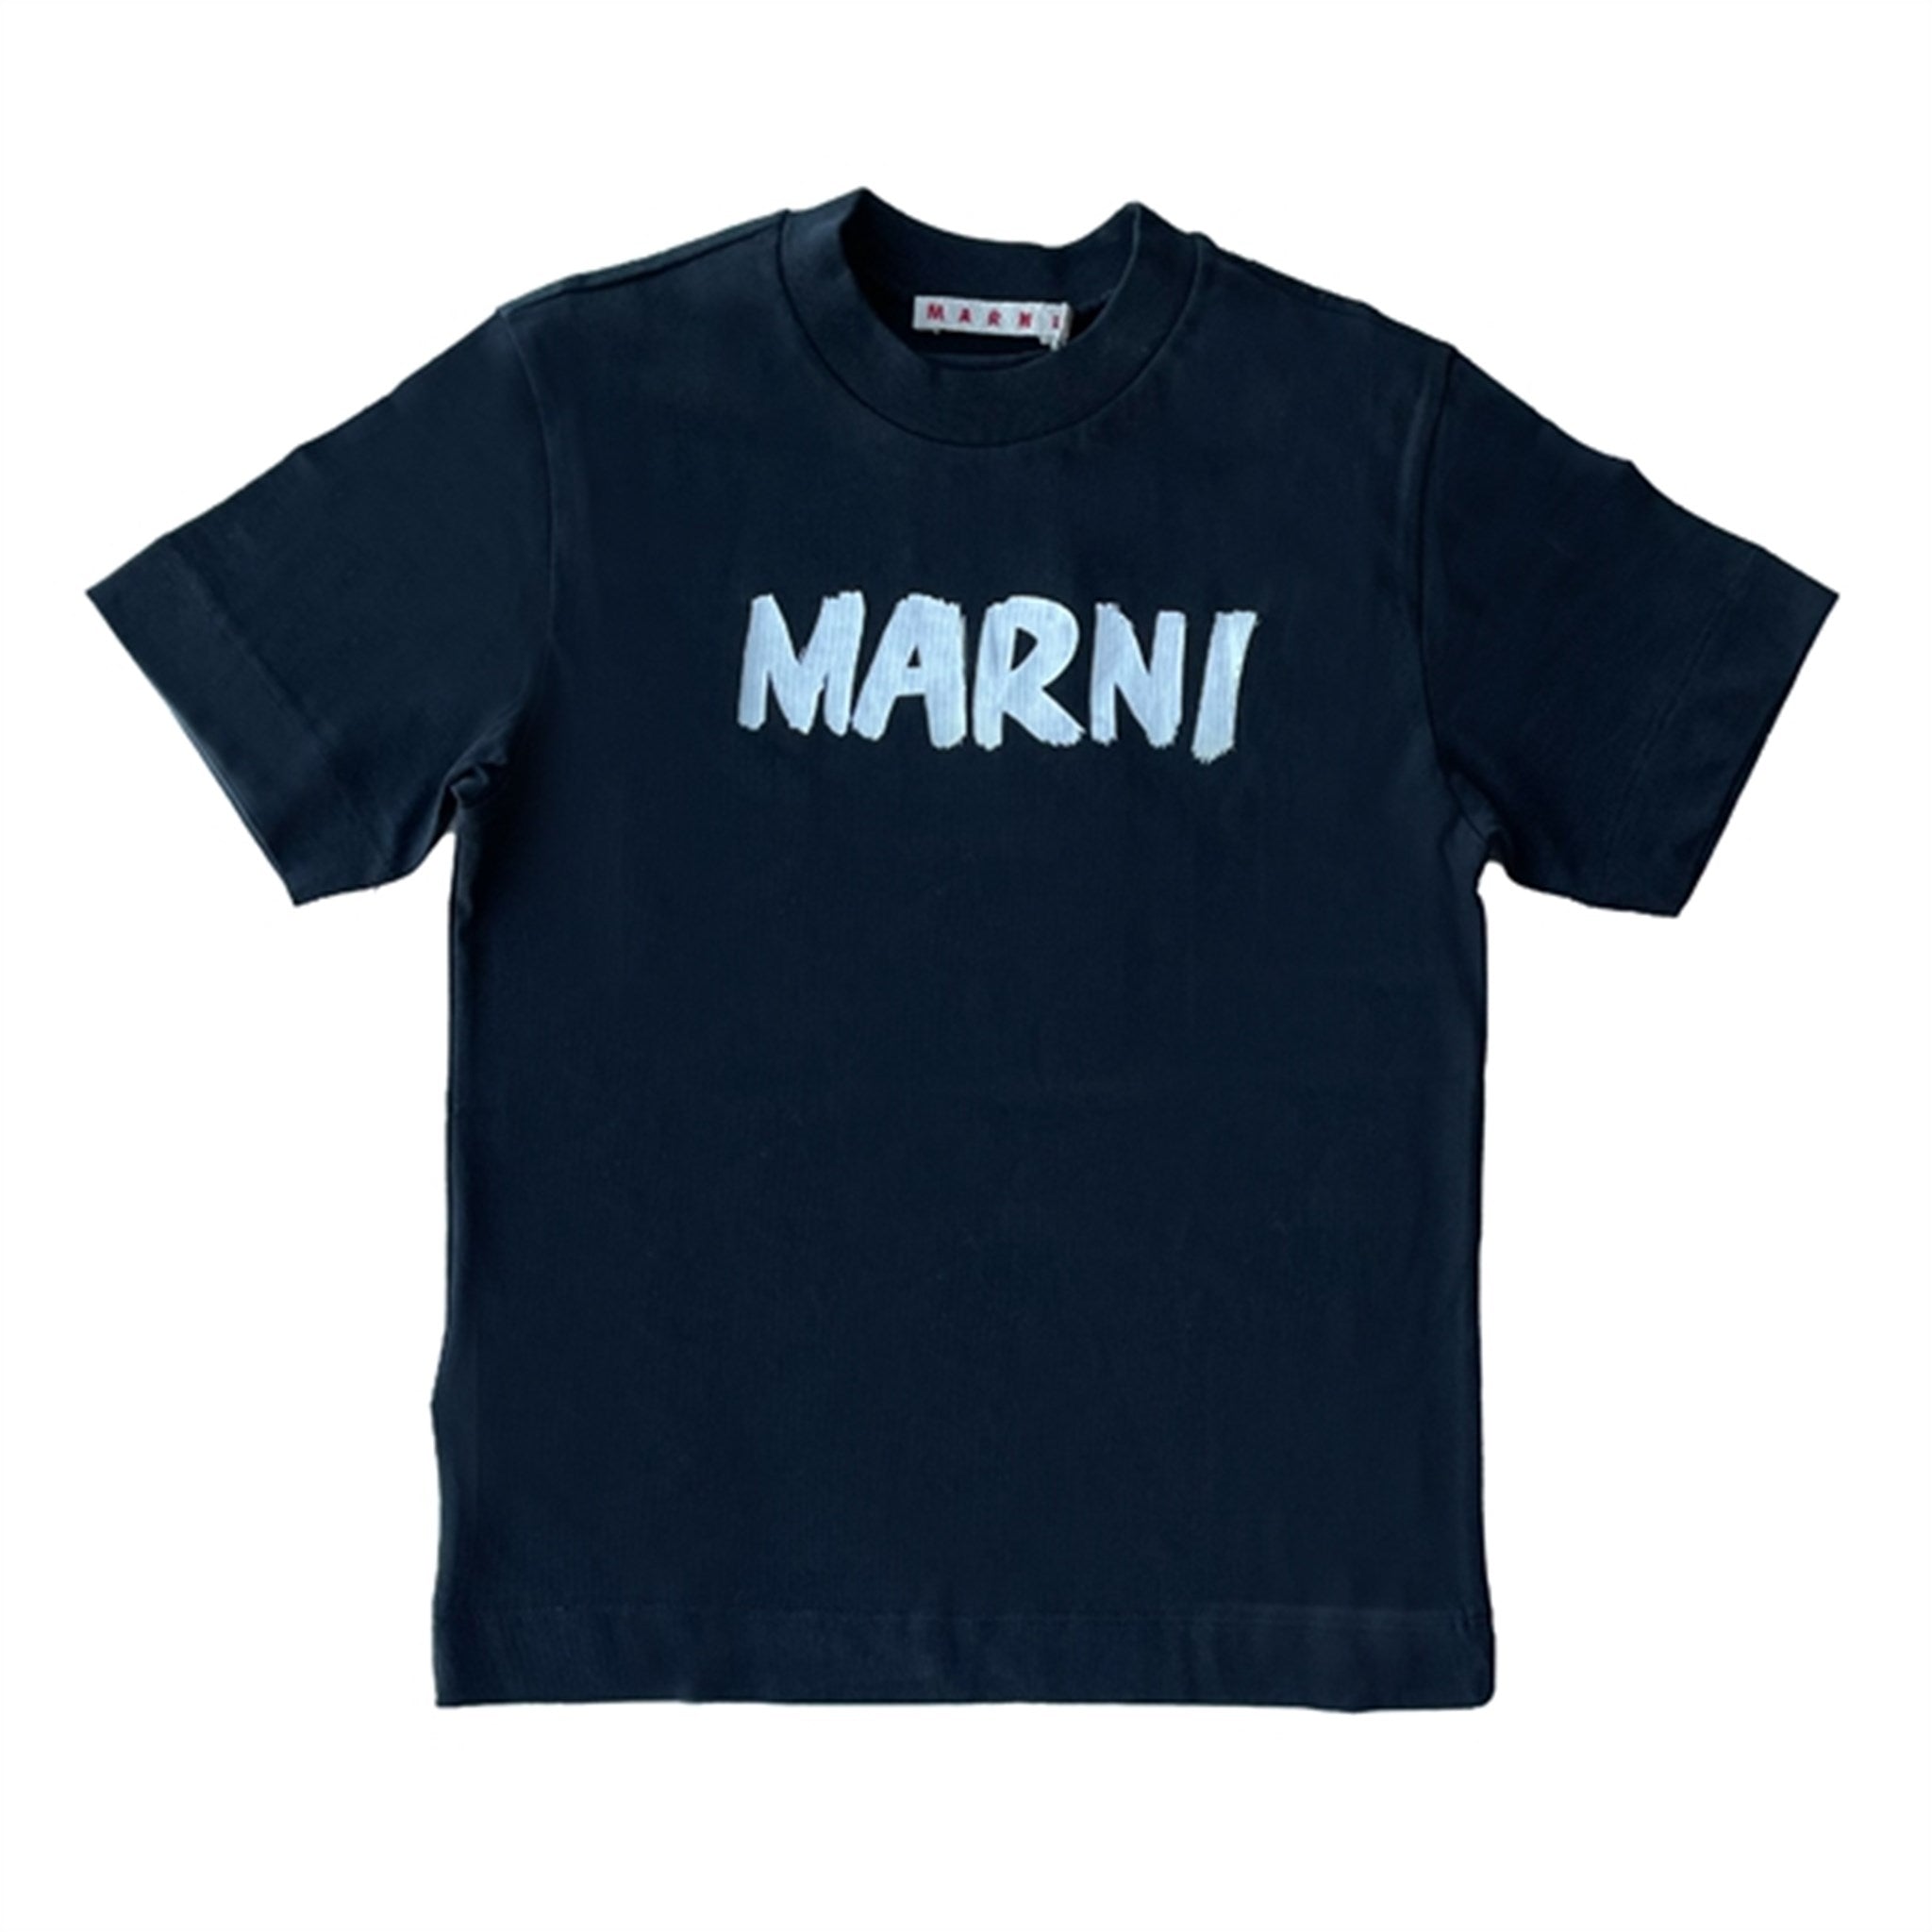 Marni Black T-shirt